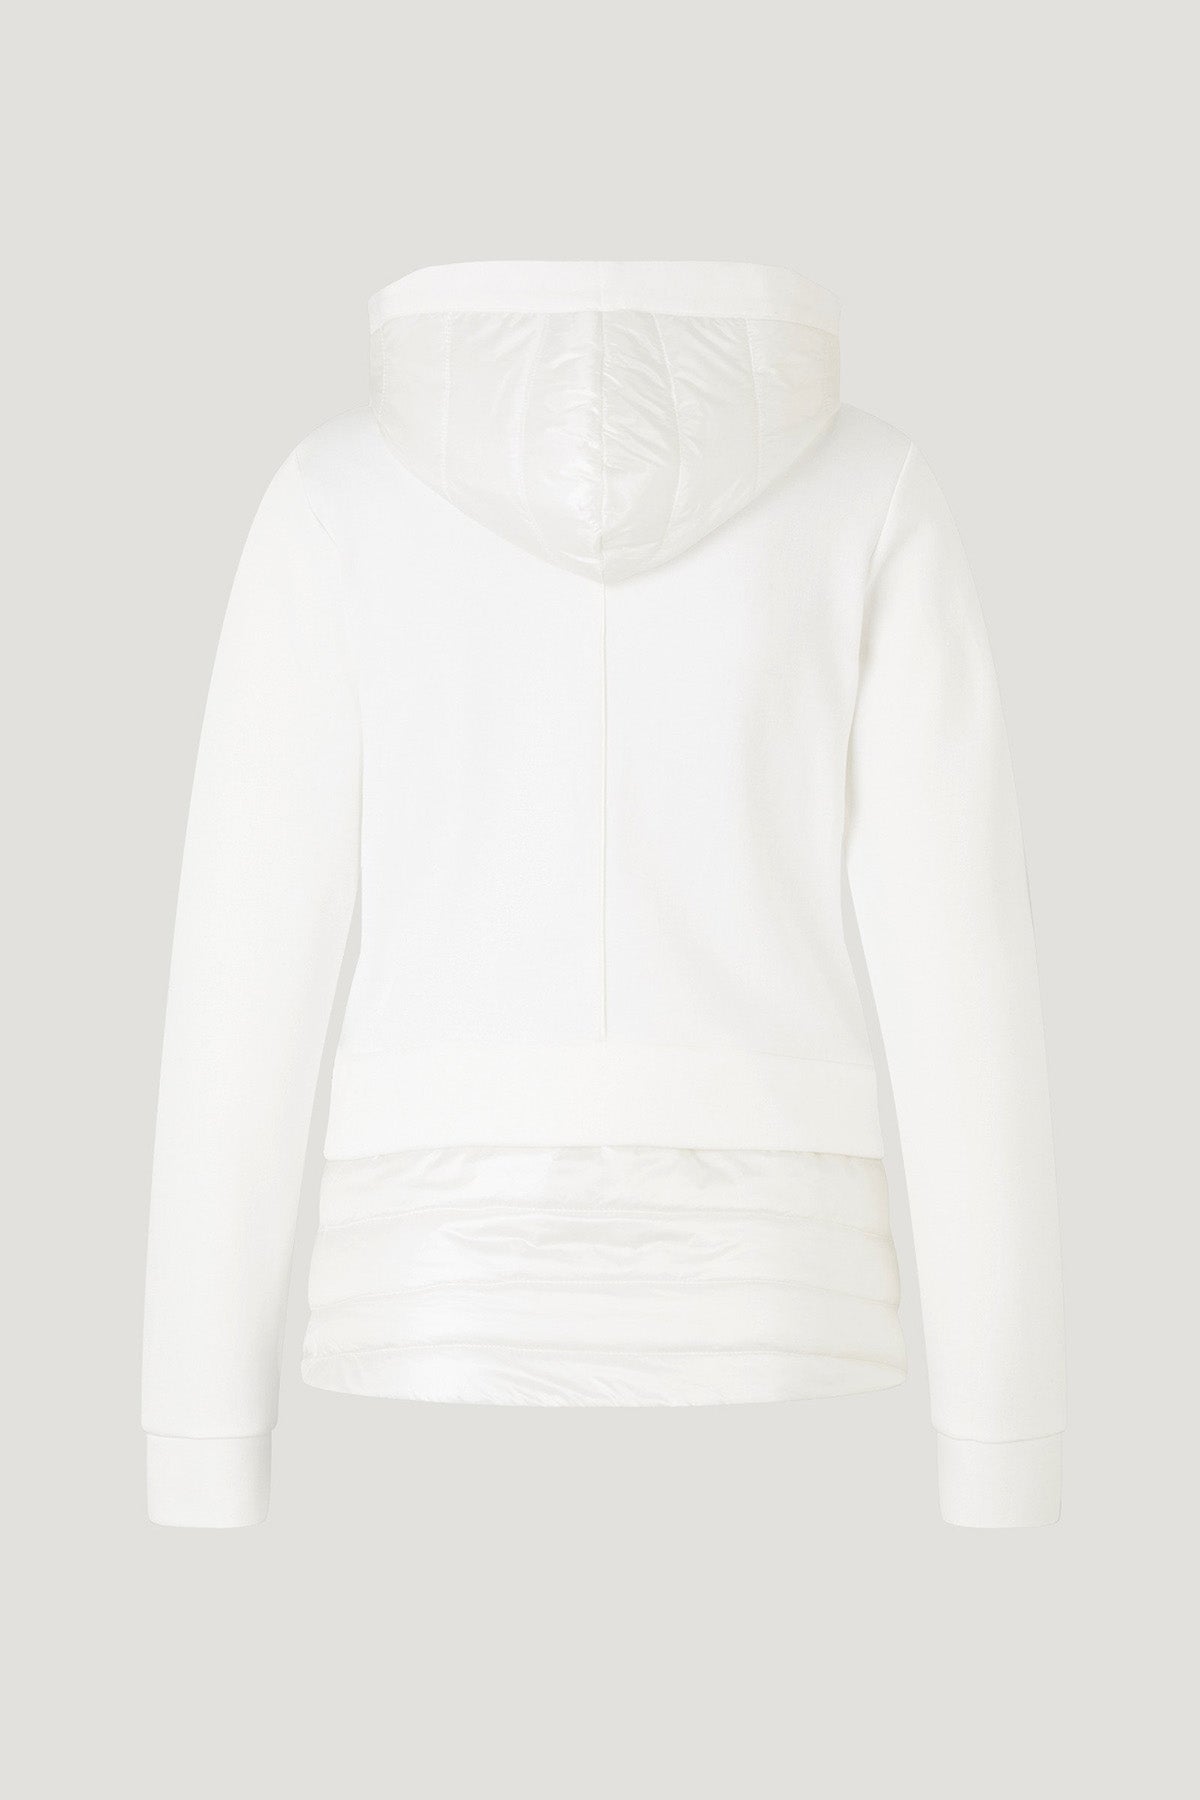 Bogner Niva Kapüşonlu Sweatshirt Ceket-Libas Trendy Fashion Store